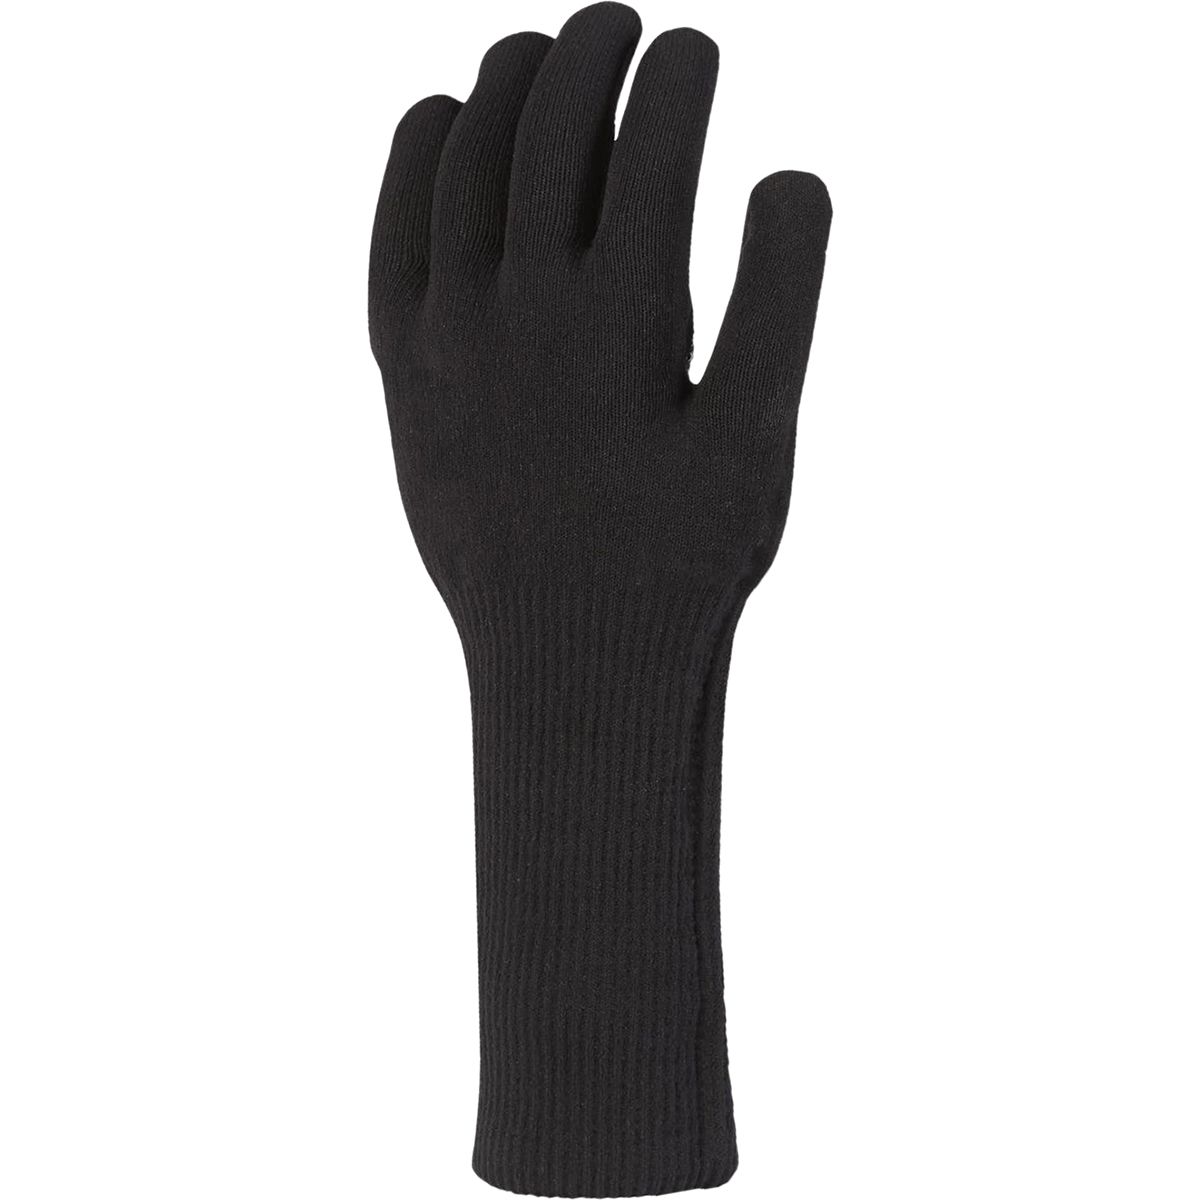 SealSkinz Waterproof All Weather Ultra Grip Knitted Gauntlet